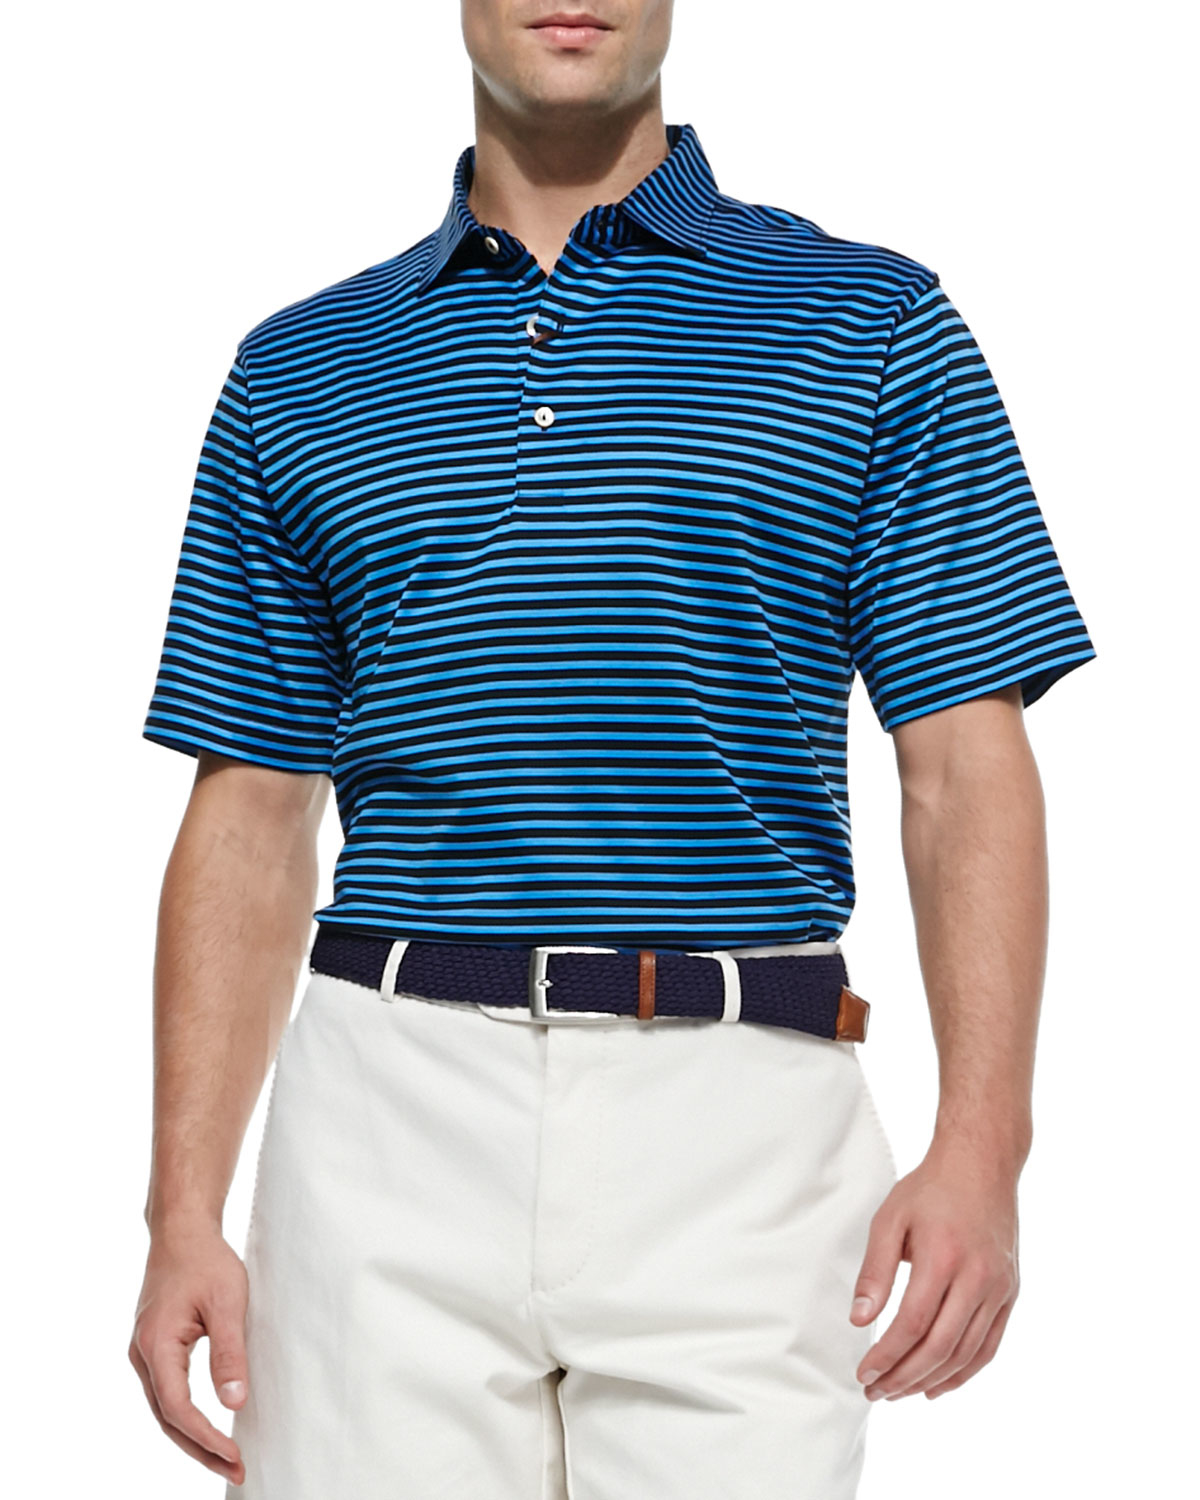 Peter Millar Logo Polo : Peter Millar Polo Golf Shirt Quail Ridge Logo ...